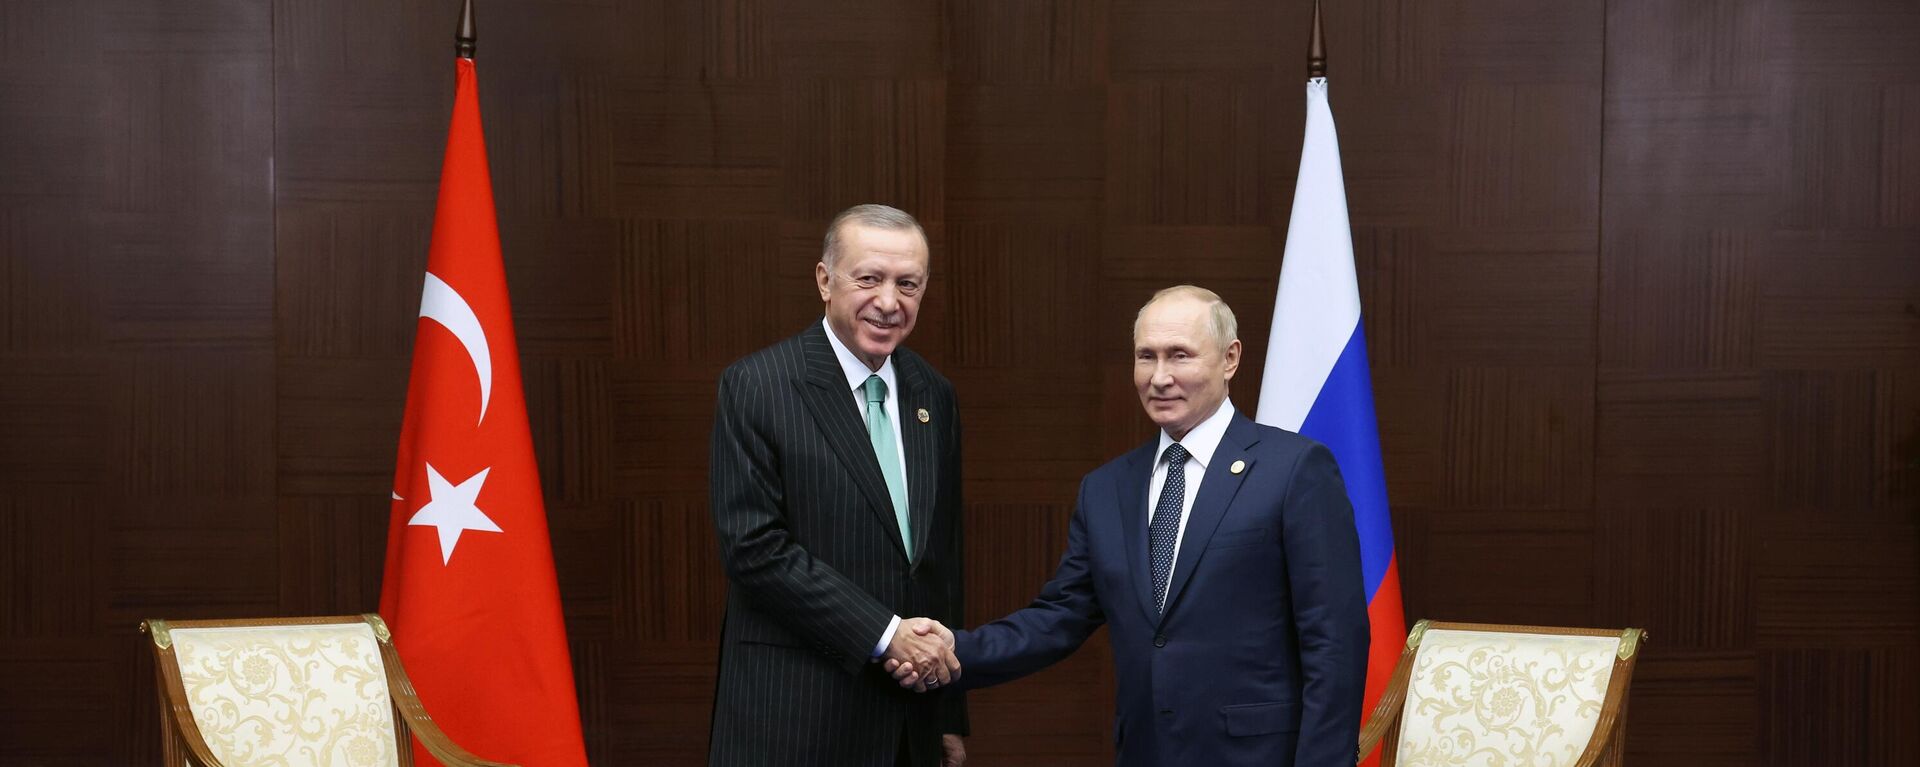 Президент РФ Владимир Путин и президент Турции Реджеп Тайип Эрдоган (слева) во время встречи, фото из архива - Sputnik Азербайджан, 1920, 28.05.2023